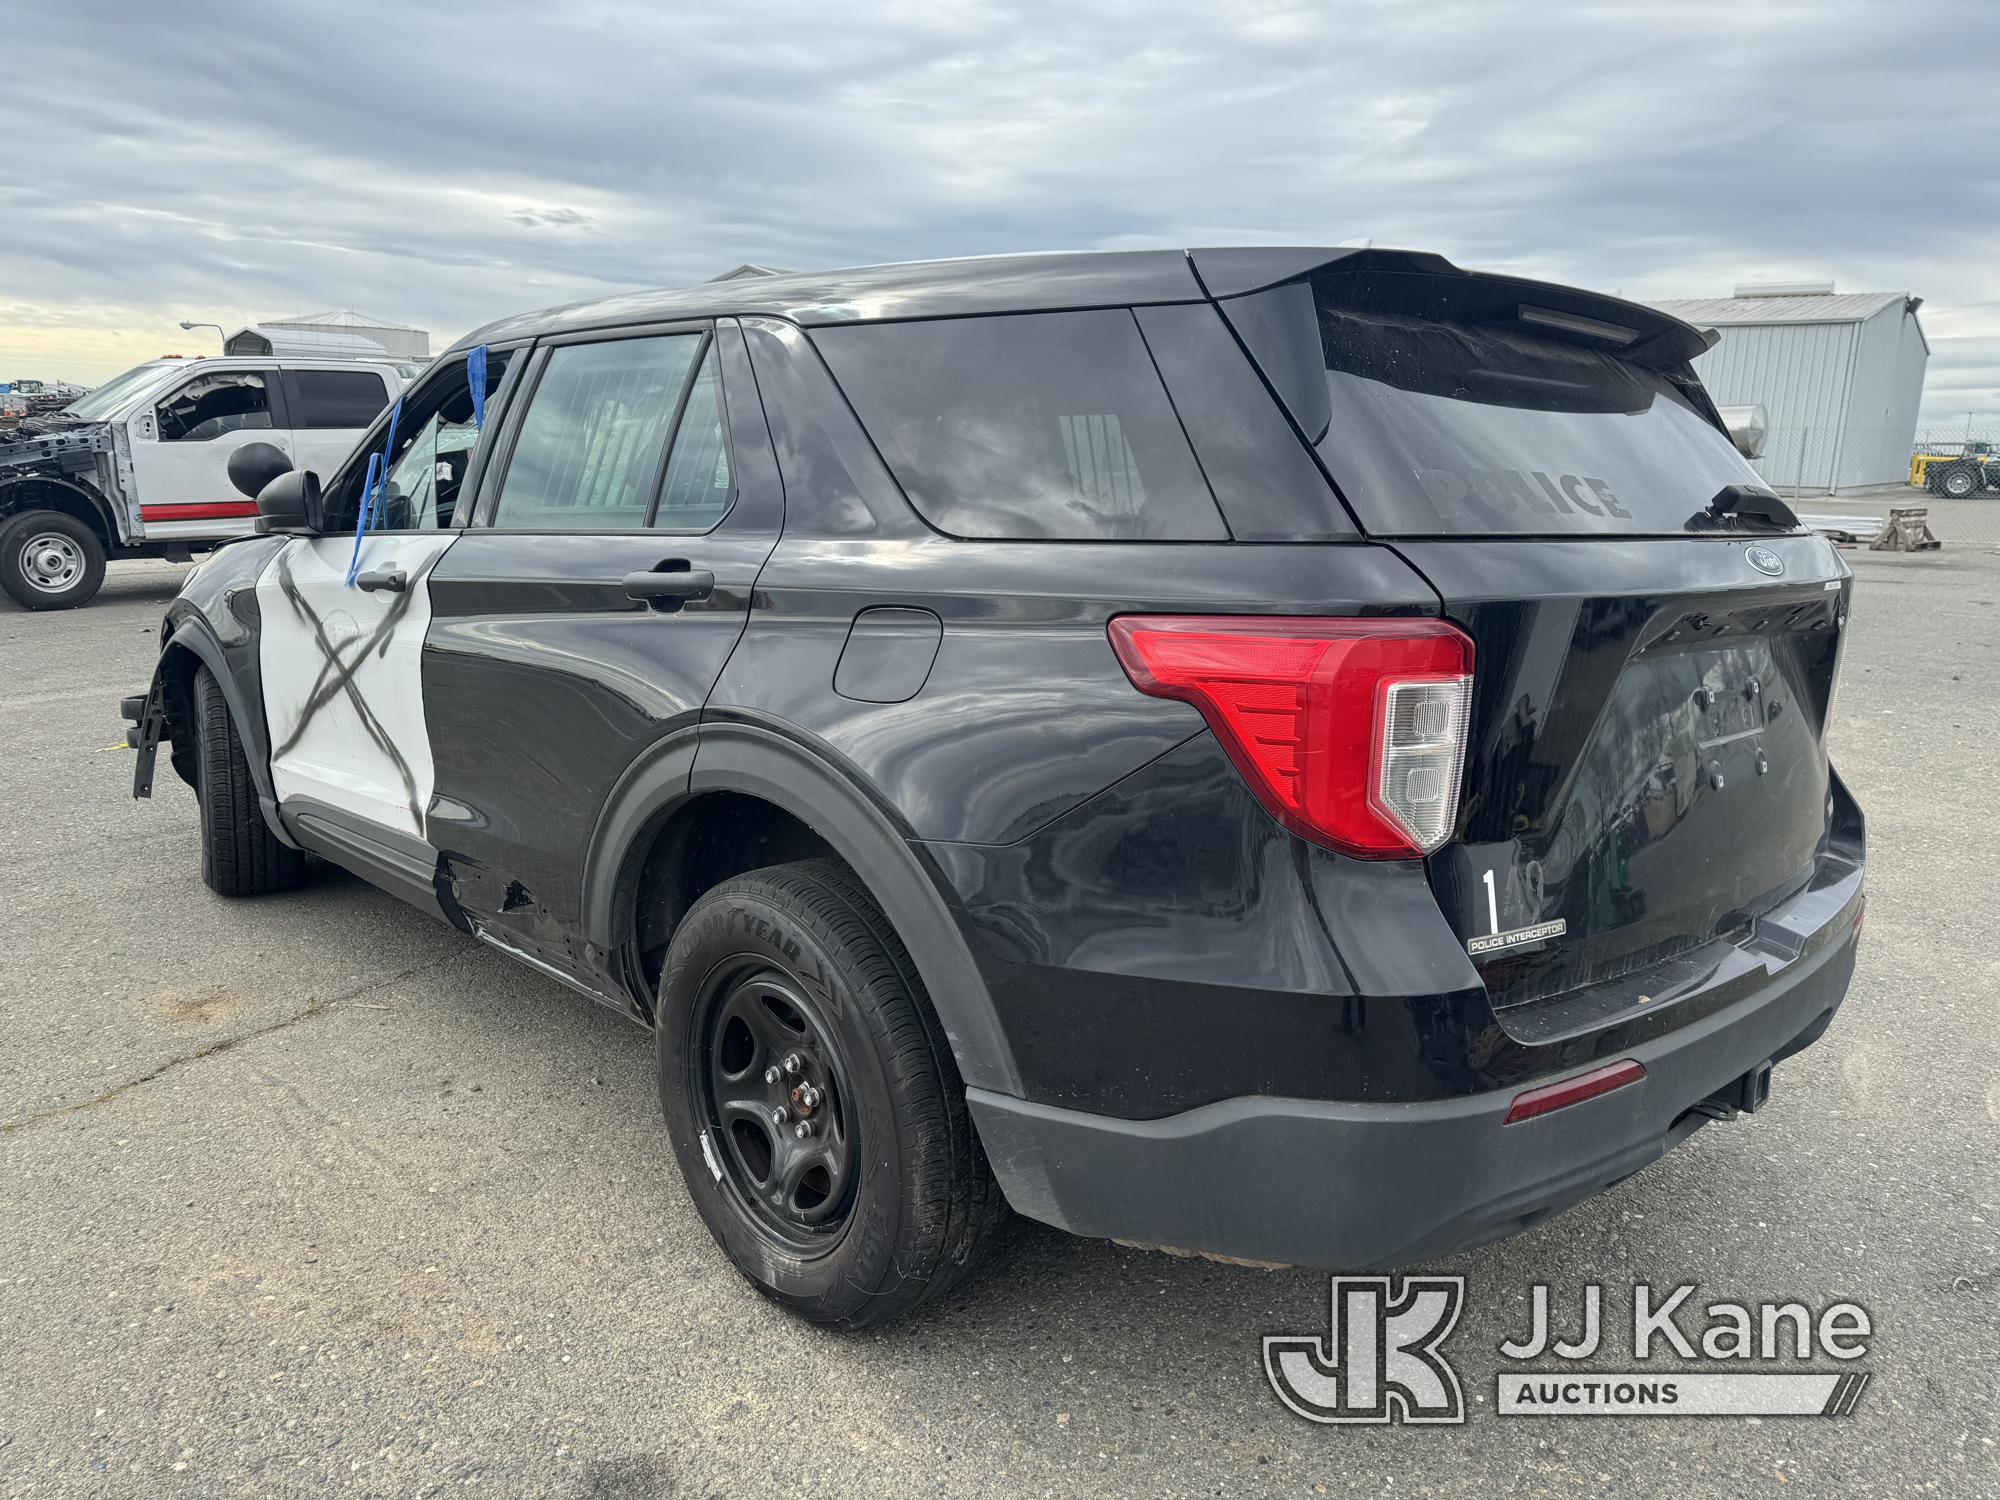 (Dixon, CA) 2020 Ford Explorer AWD Police Interceptor 4-Door Sport Utility Vehicle Not Running, Cond